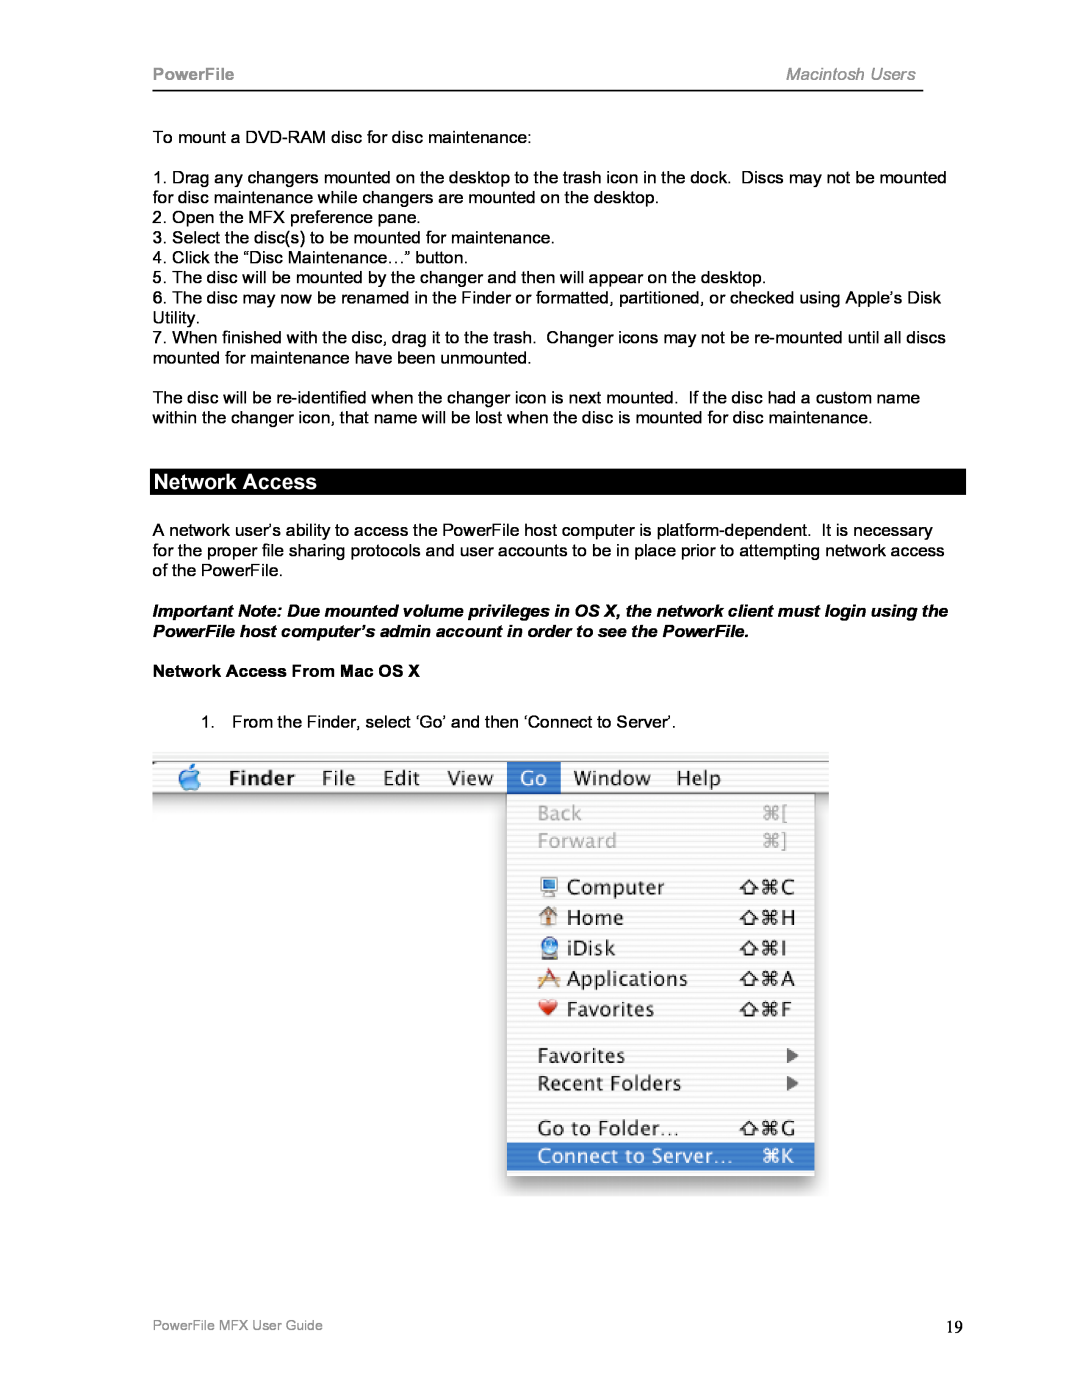 PowerFile C200 manual Network Access From Mac OS, PowerFile, Macintosh Users 